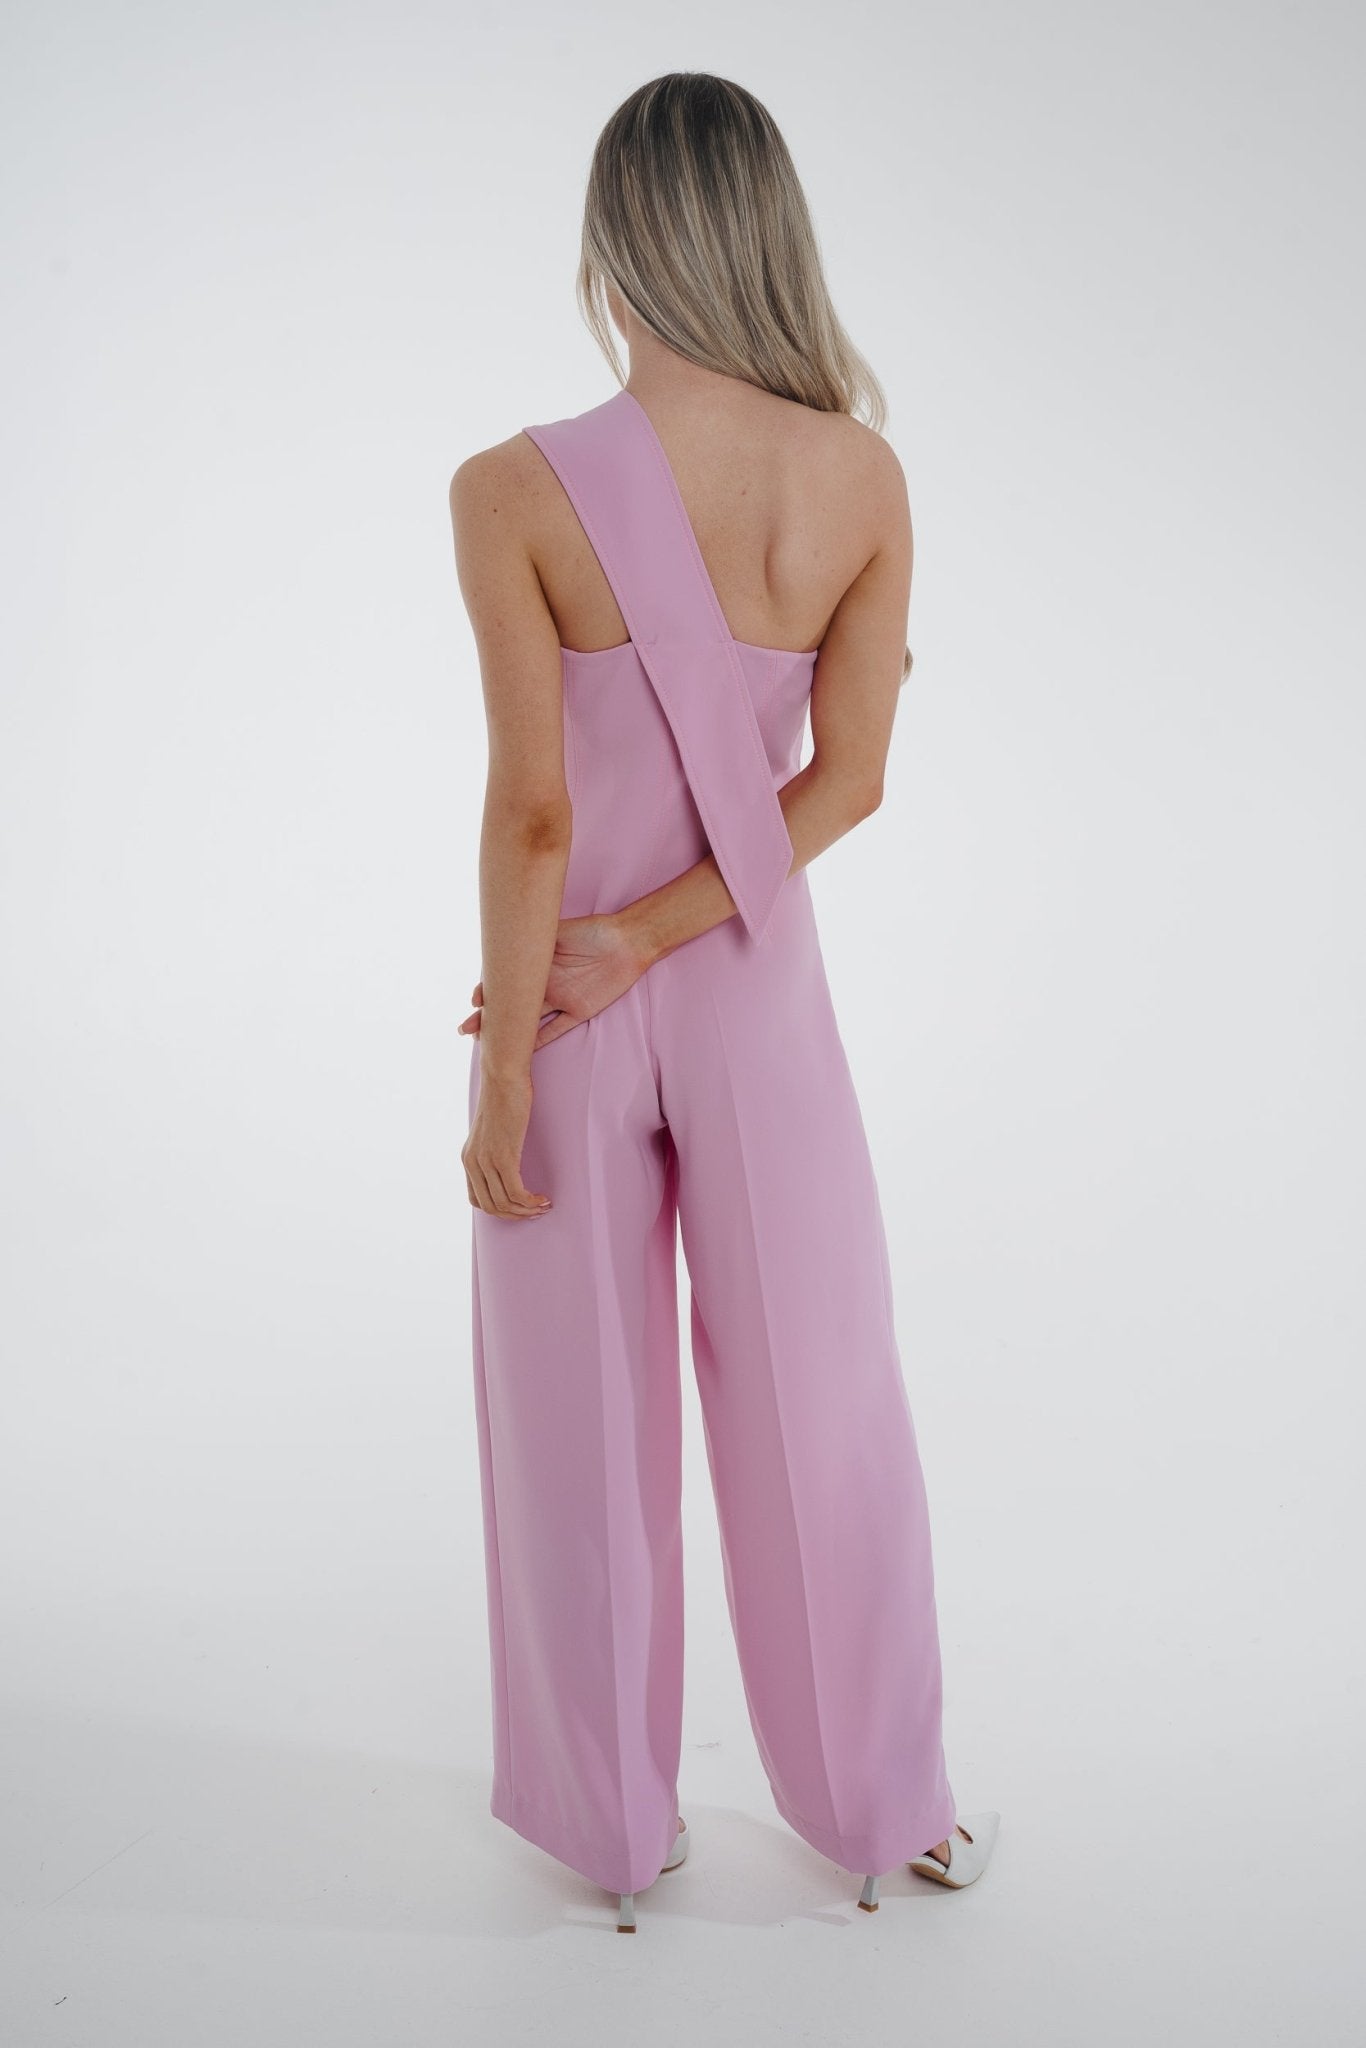 Kayla One Shoulder Jumpsuit In Pink - The Walk in Wardrobe